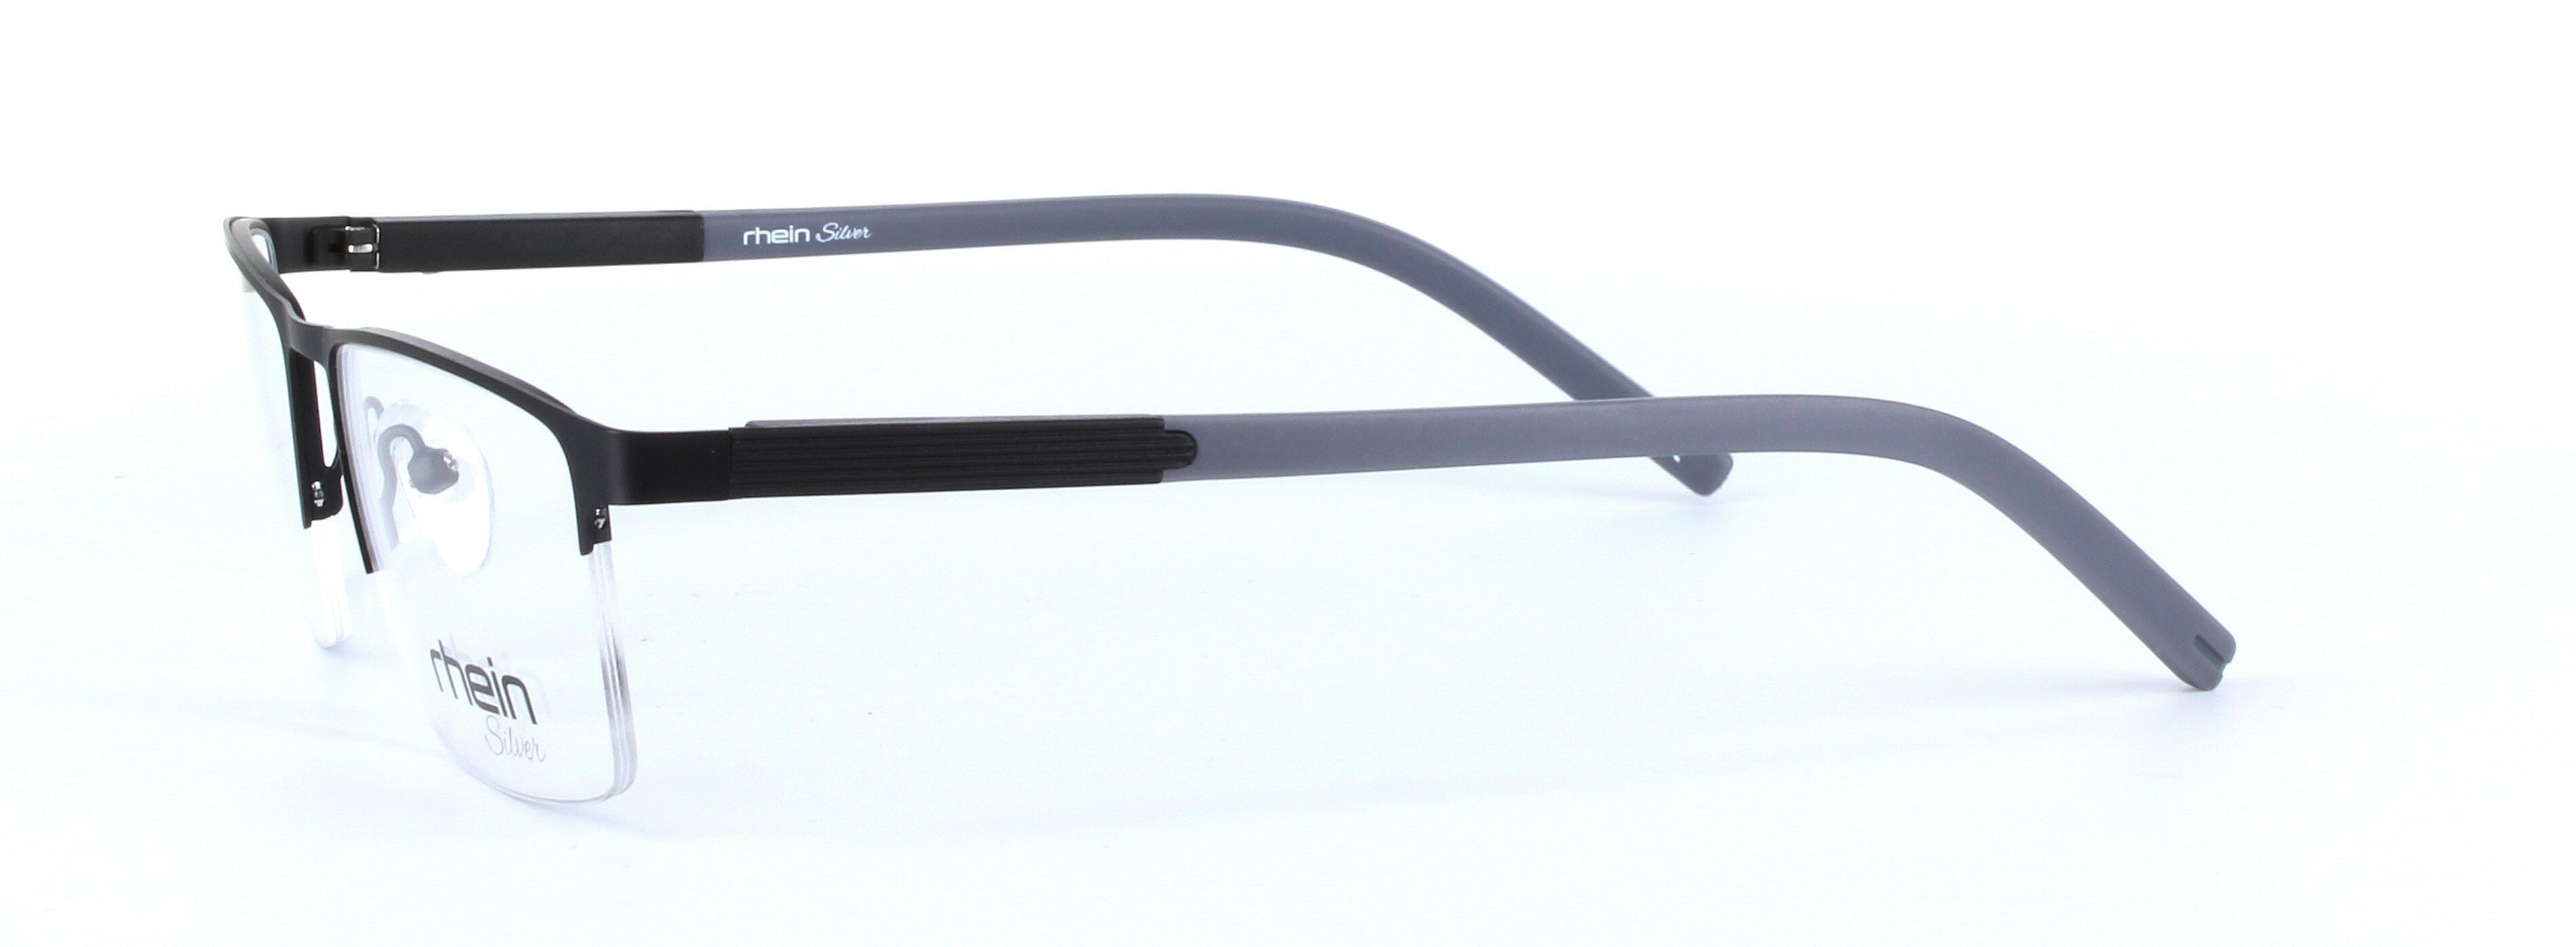 Dell Grey Semi Rimless Rectangular Metal Glasses - Image View 2